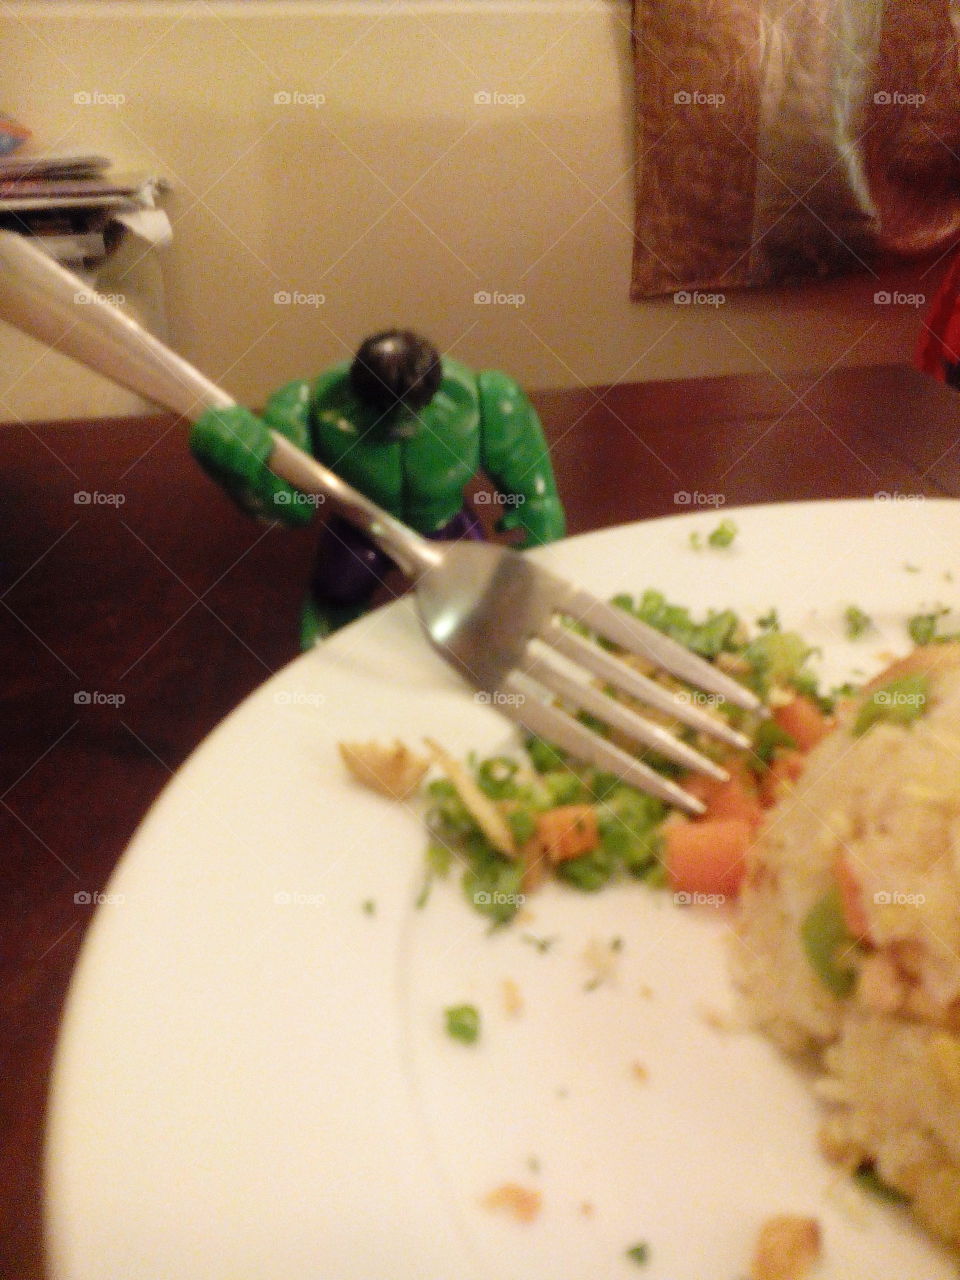 Super heroes eat vegetable too. toy Lego hulk eating